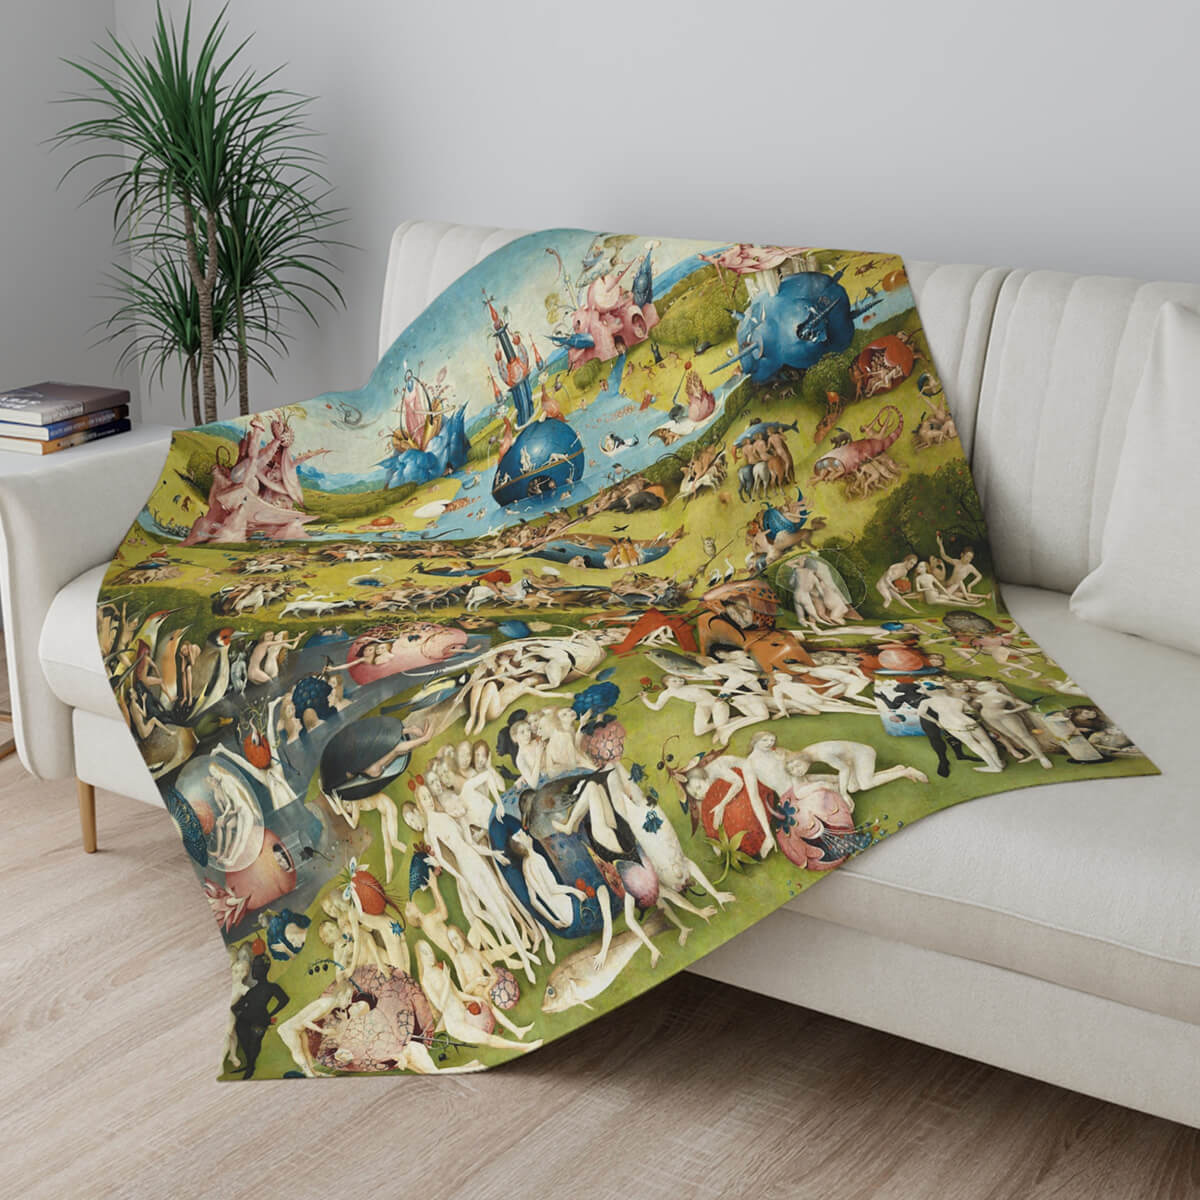 Surreal Art Flannel Blanket